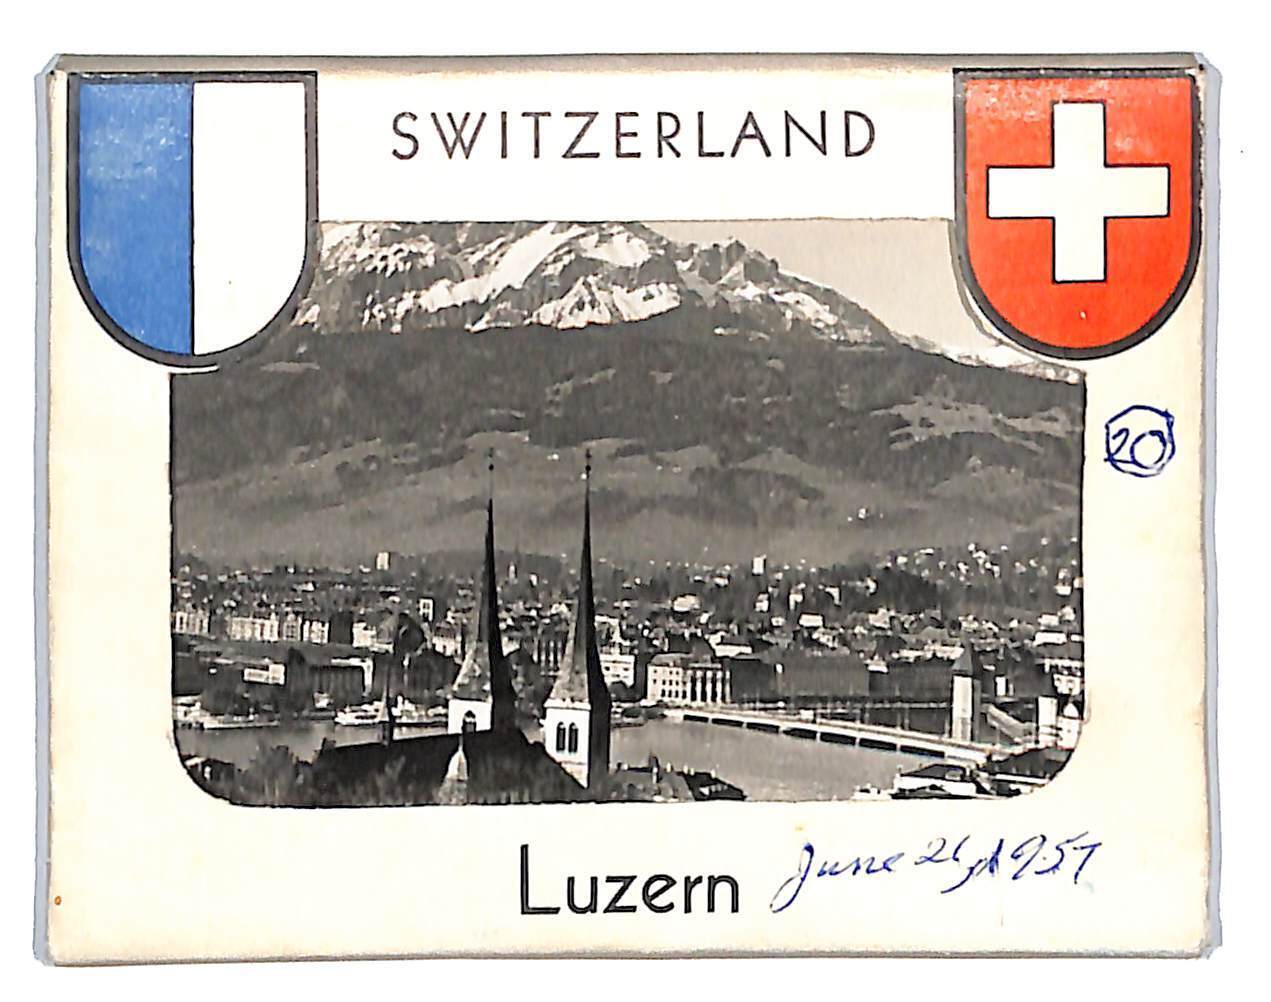 Luzern Switzerland Souvenir Mini RPPC* Postcard Packet - c1957 10 cards VGC